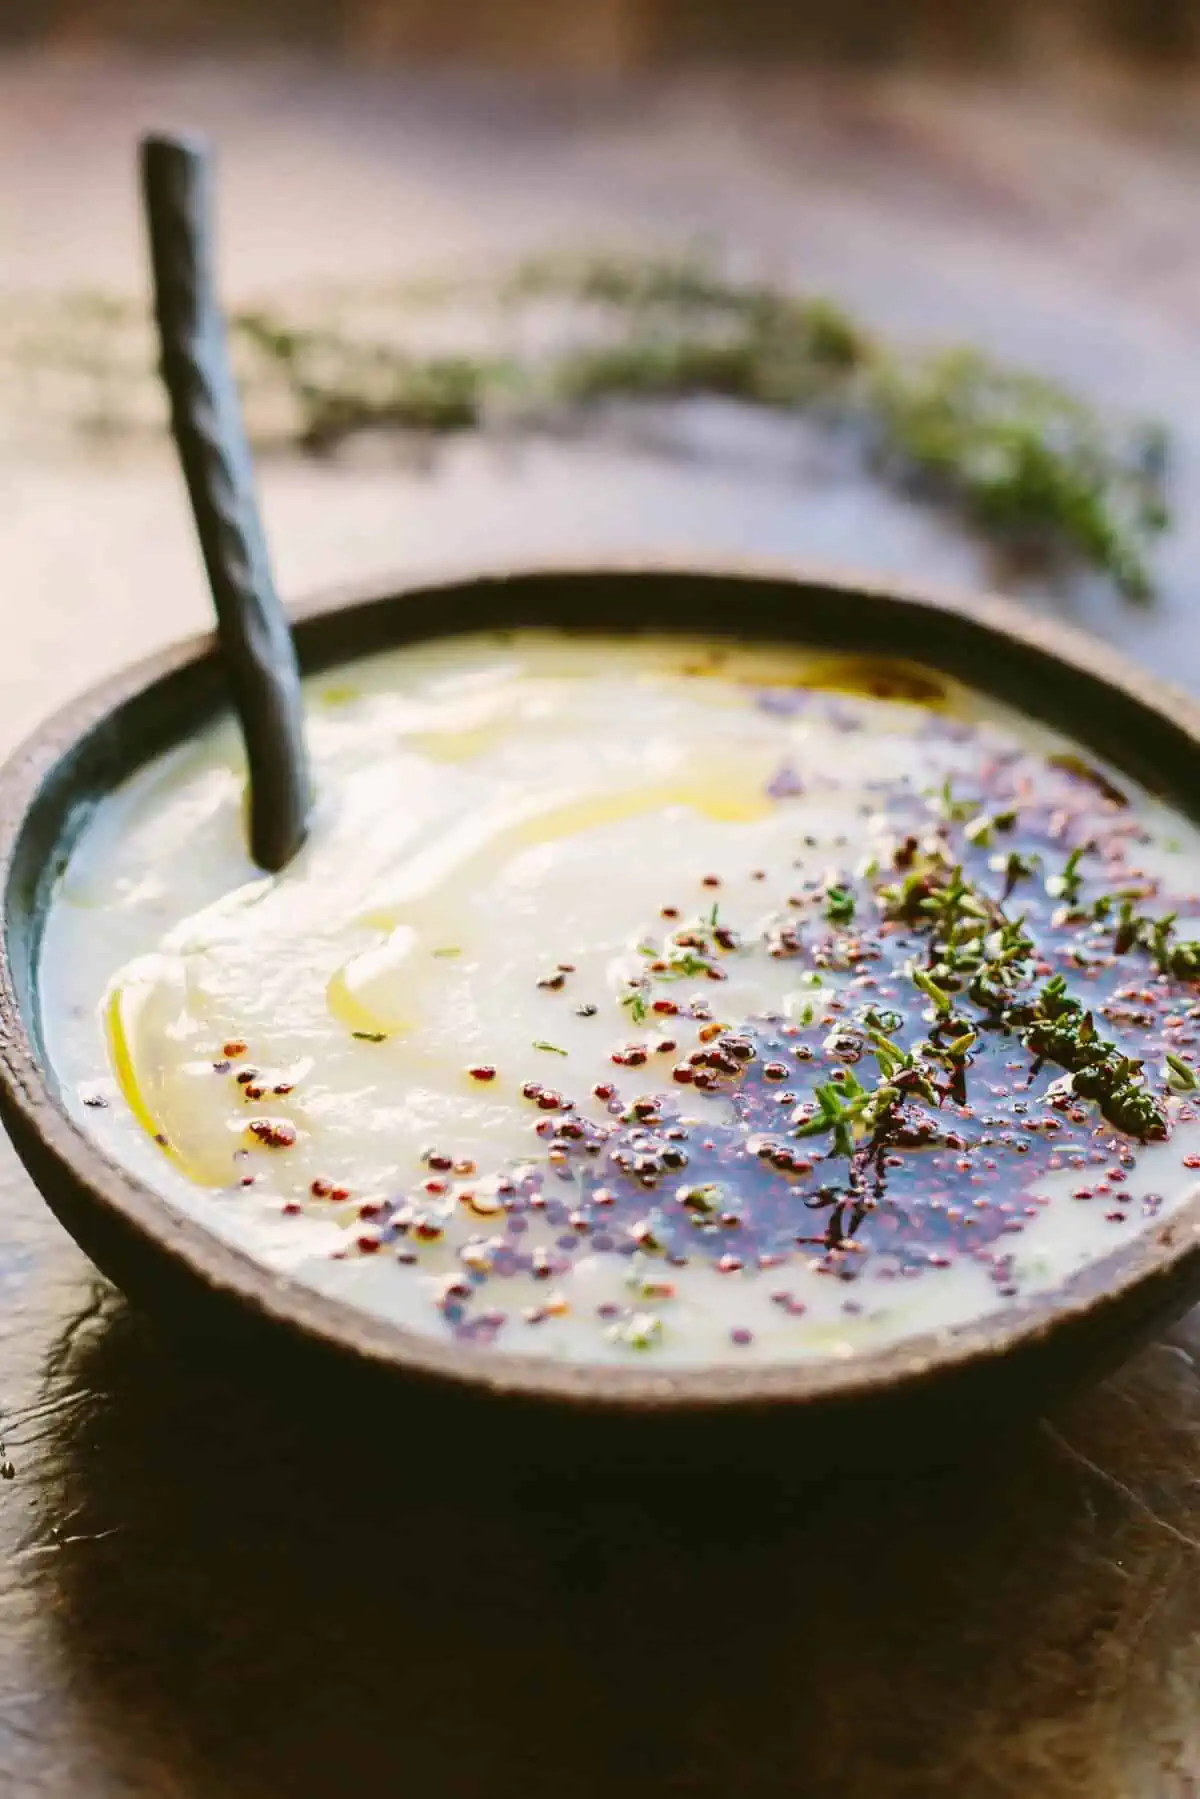 Parsnip Cauliflower Soup with Puffed Quinoa (Video!)